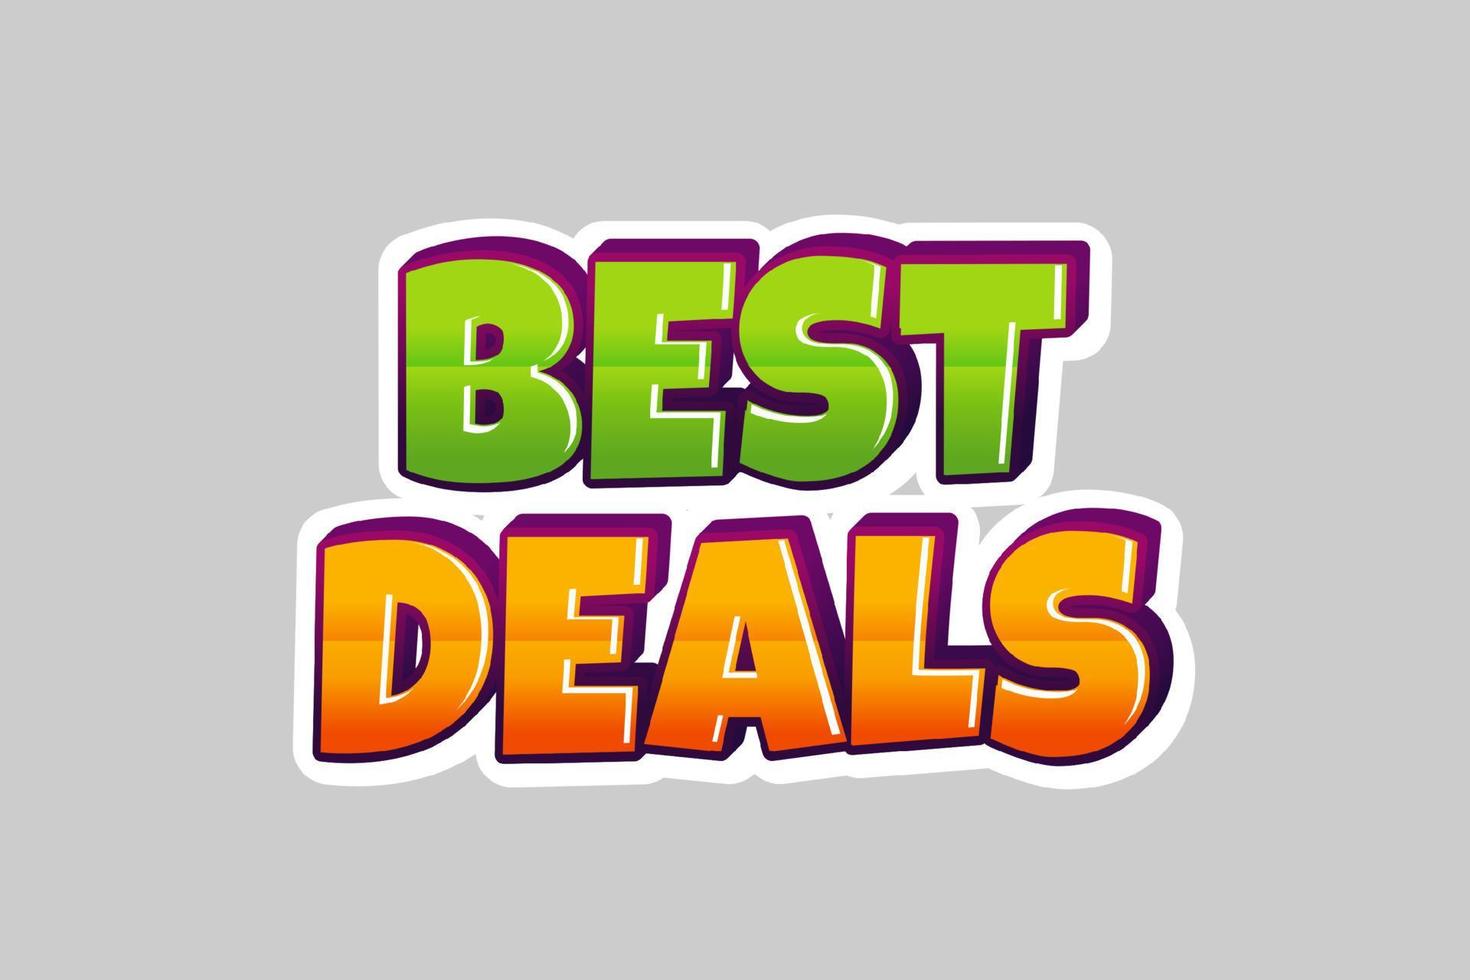 https://static.vecteezy.com/system/resources/previews/016/187/692/non_2x/best-deals-promotion-icon-best-deals-text-style-effect-vector.jpg